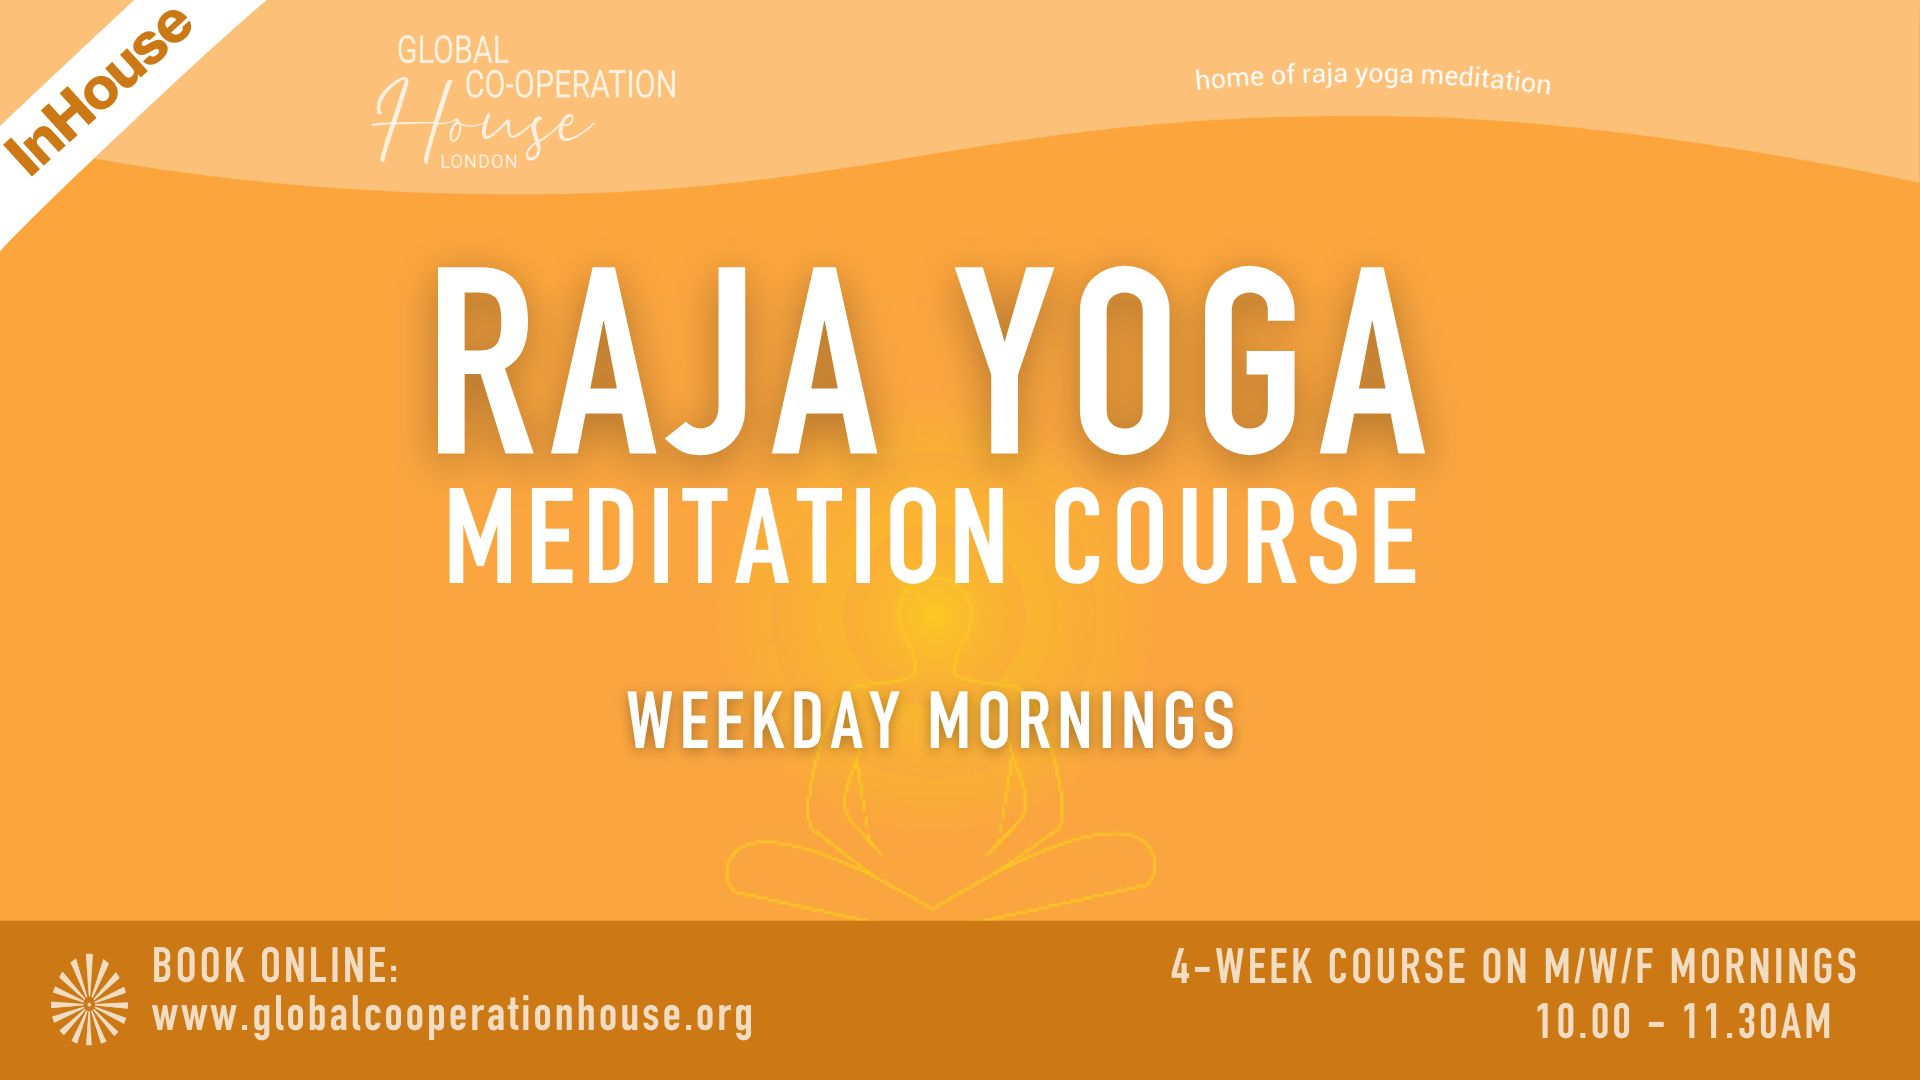 In House - Raja Yoga Meditation Course - Weekday Mornings